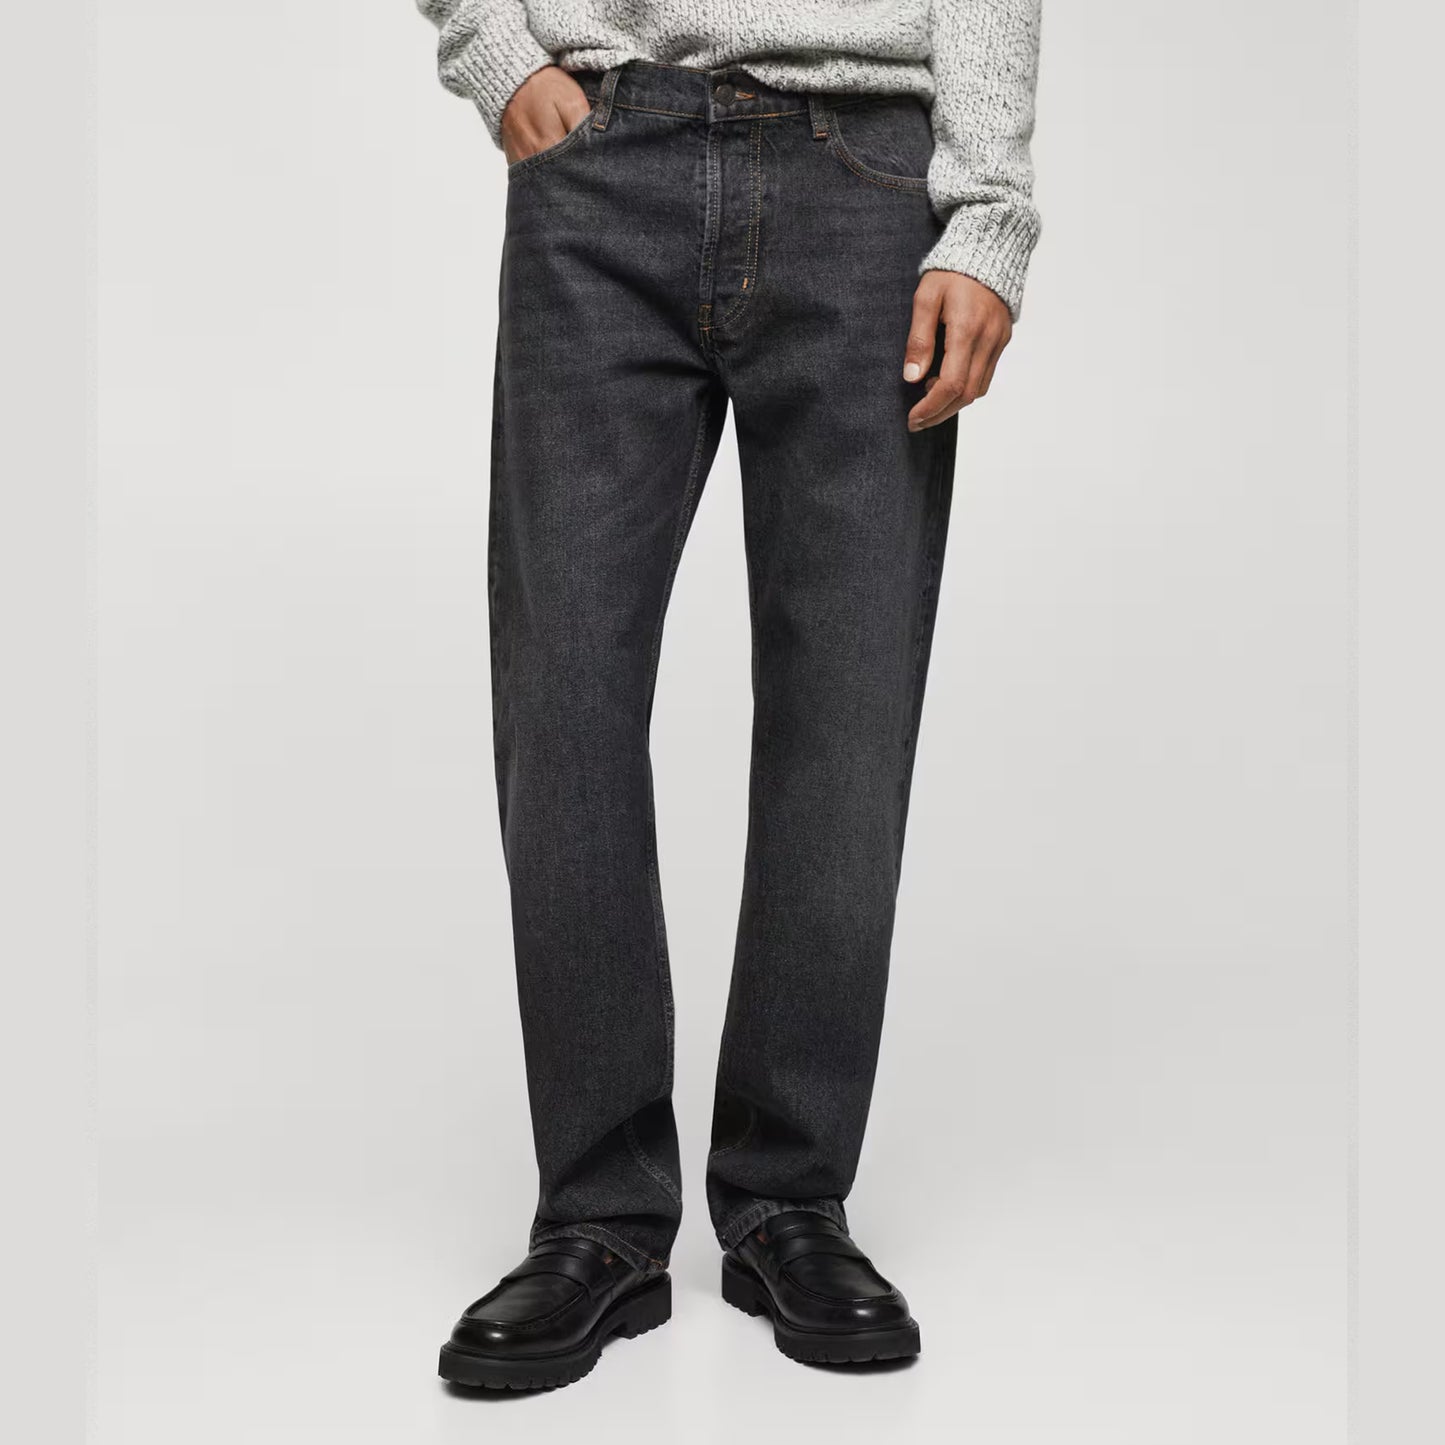 Men's Charcoal Black Denim Jeans